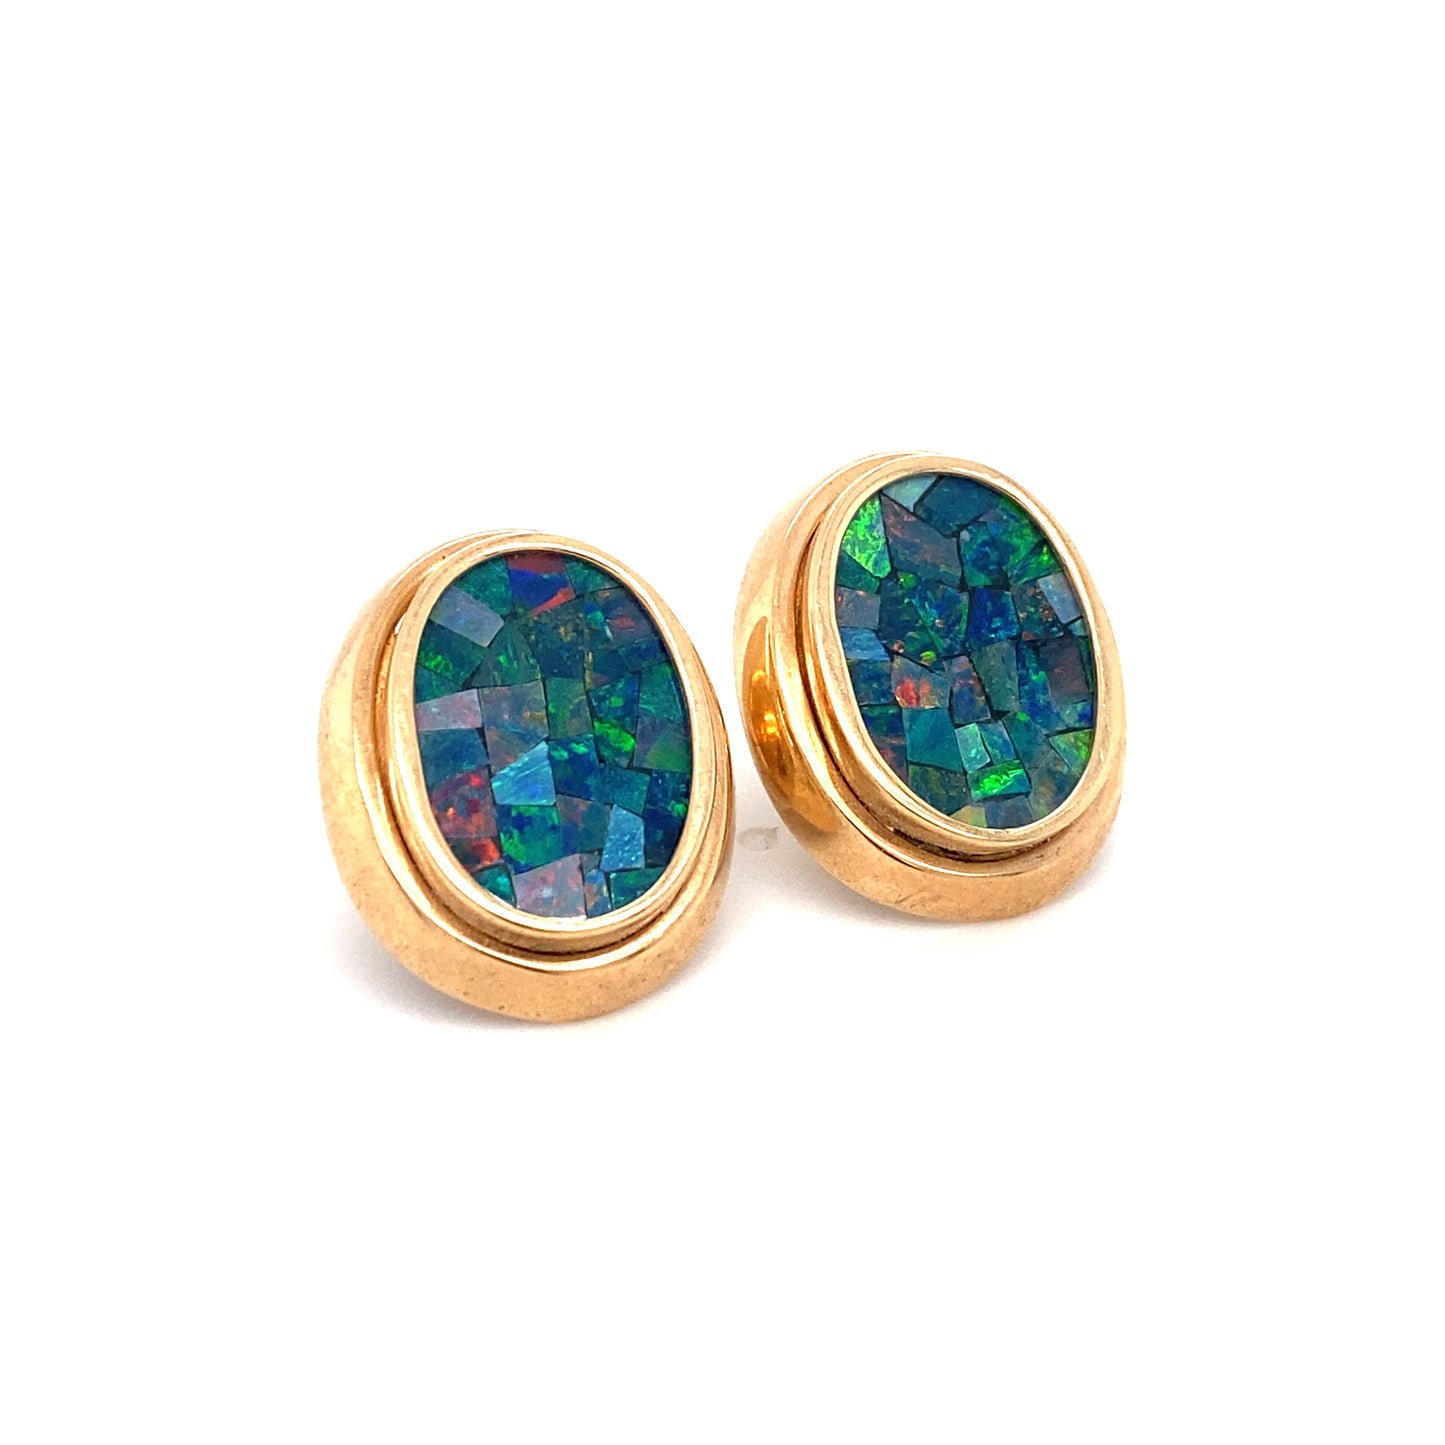 Circa 1950s Mosaic Opal Oval Stud Earrings in 14K Gold